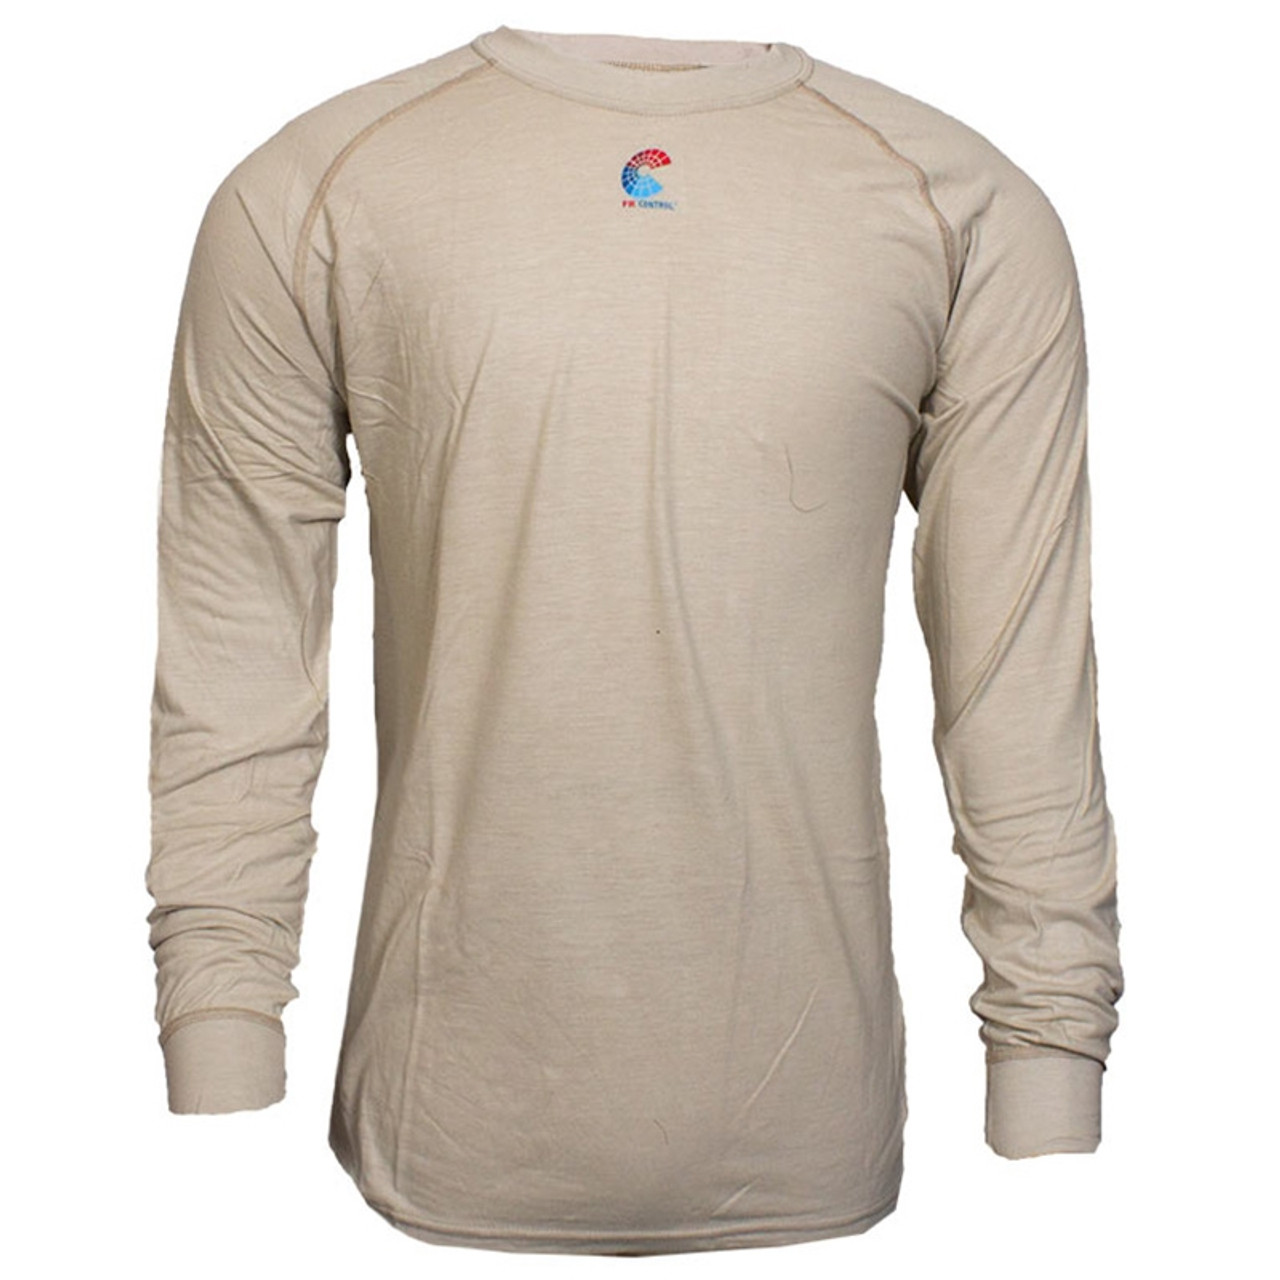 NSA FR NFPA 70E Made in USA Long Sleeve Base Layer T Shirt C52JKSRLS